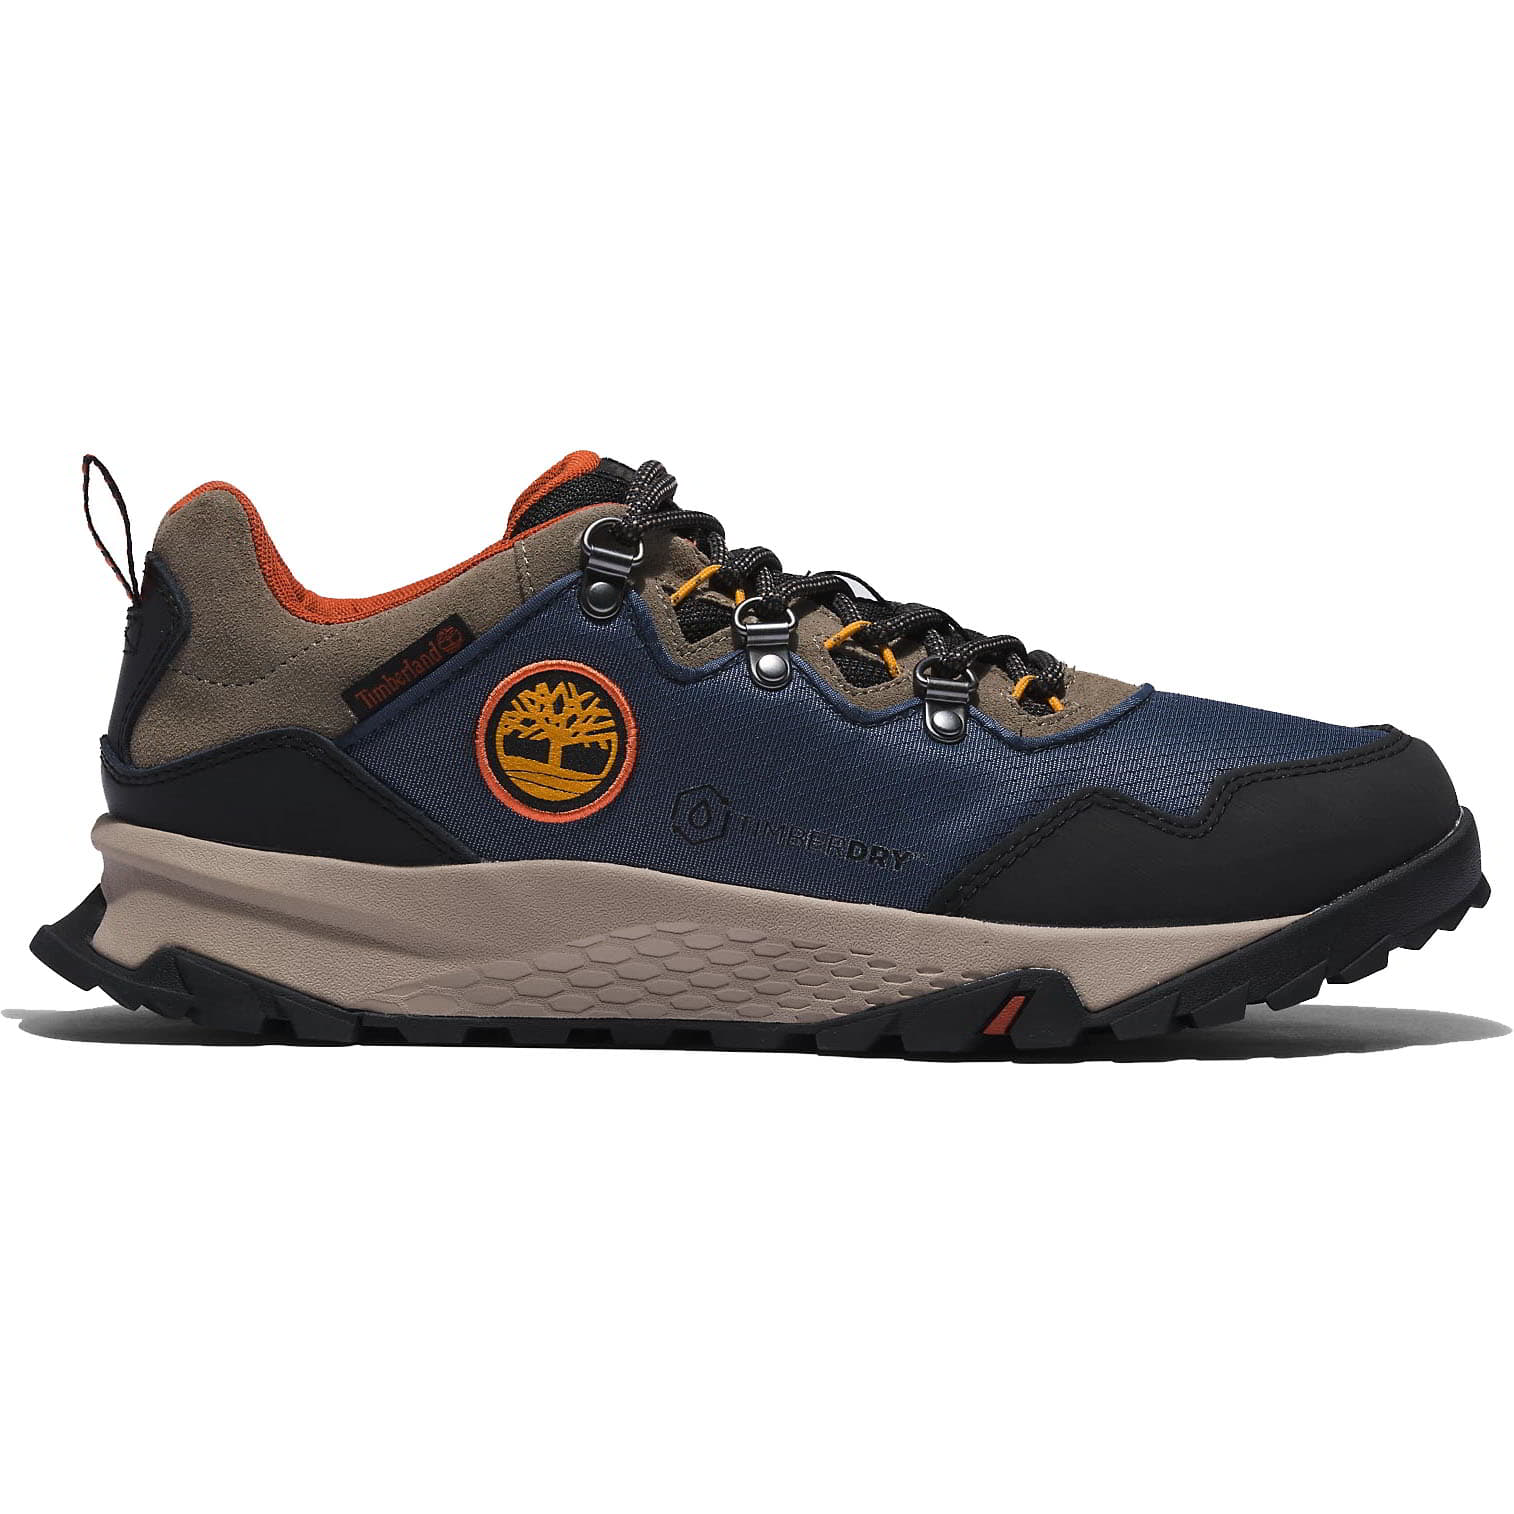 Timberland Mens A2DZZ Lincoln Peak Low Waterproof Walking Hiking Shoes - UK 10.5 Blue 2951